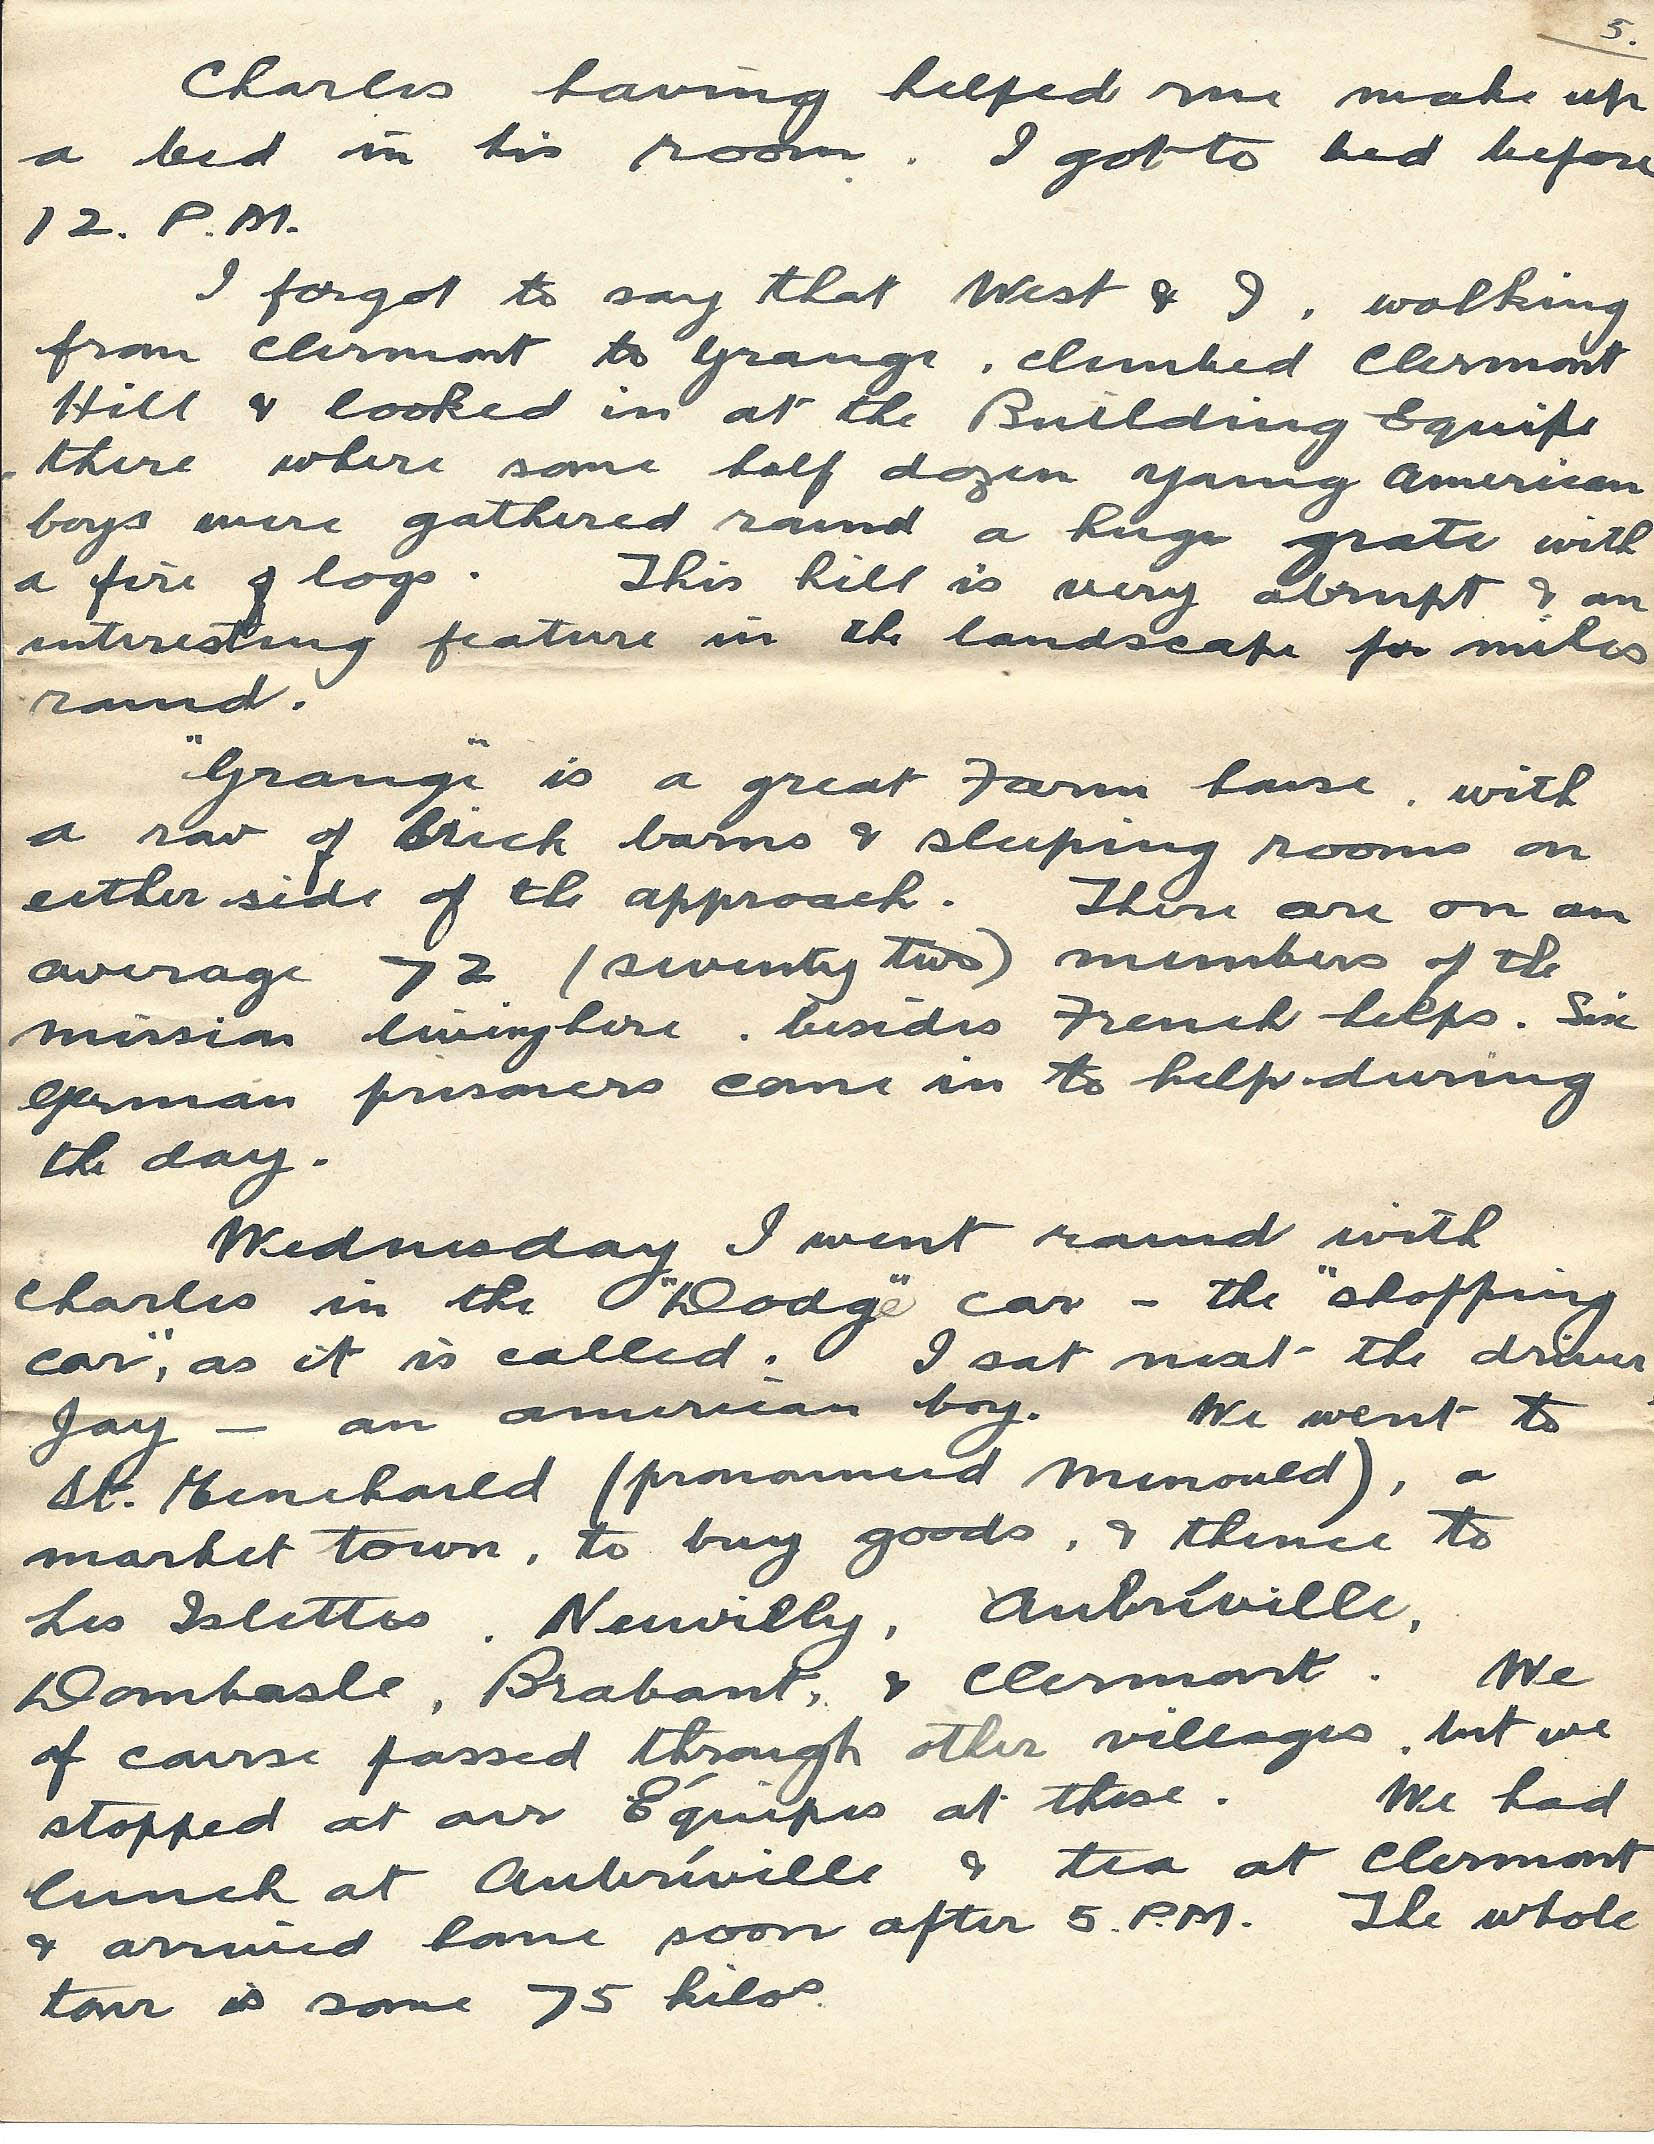 1919-11-13 p5 Donald Bearman to his father Thomas